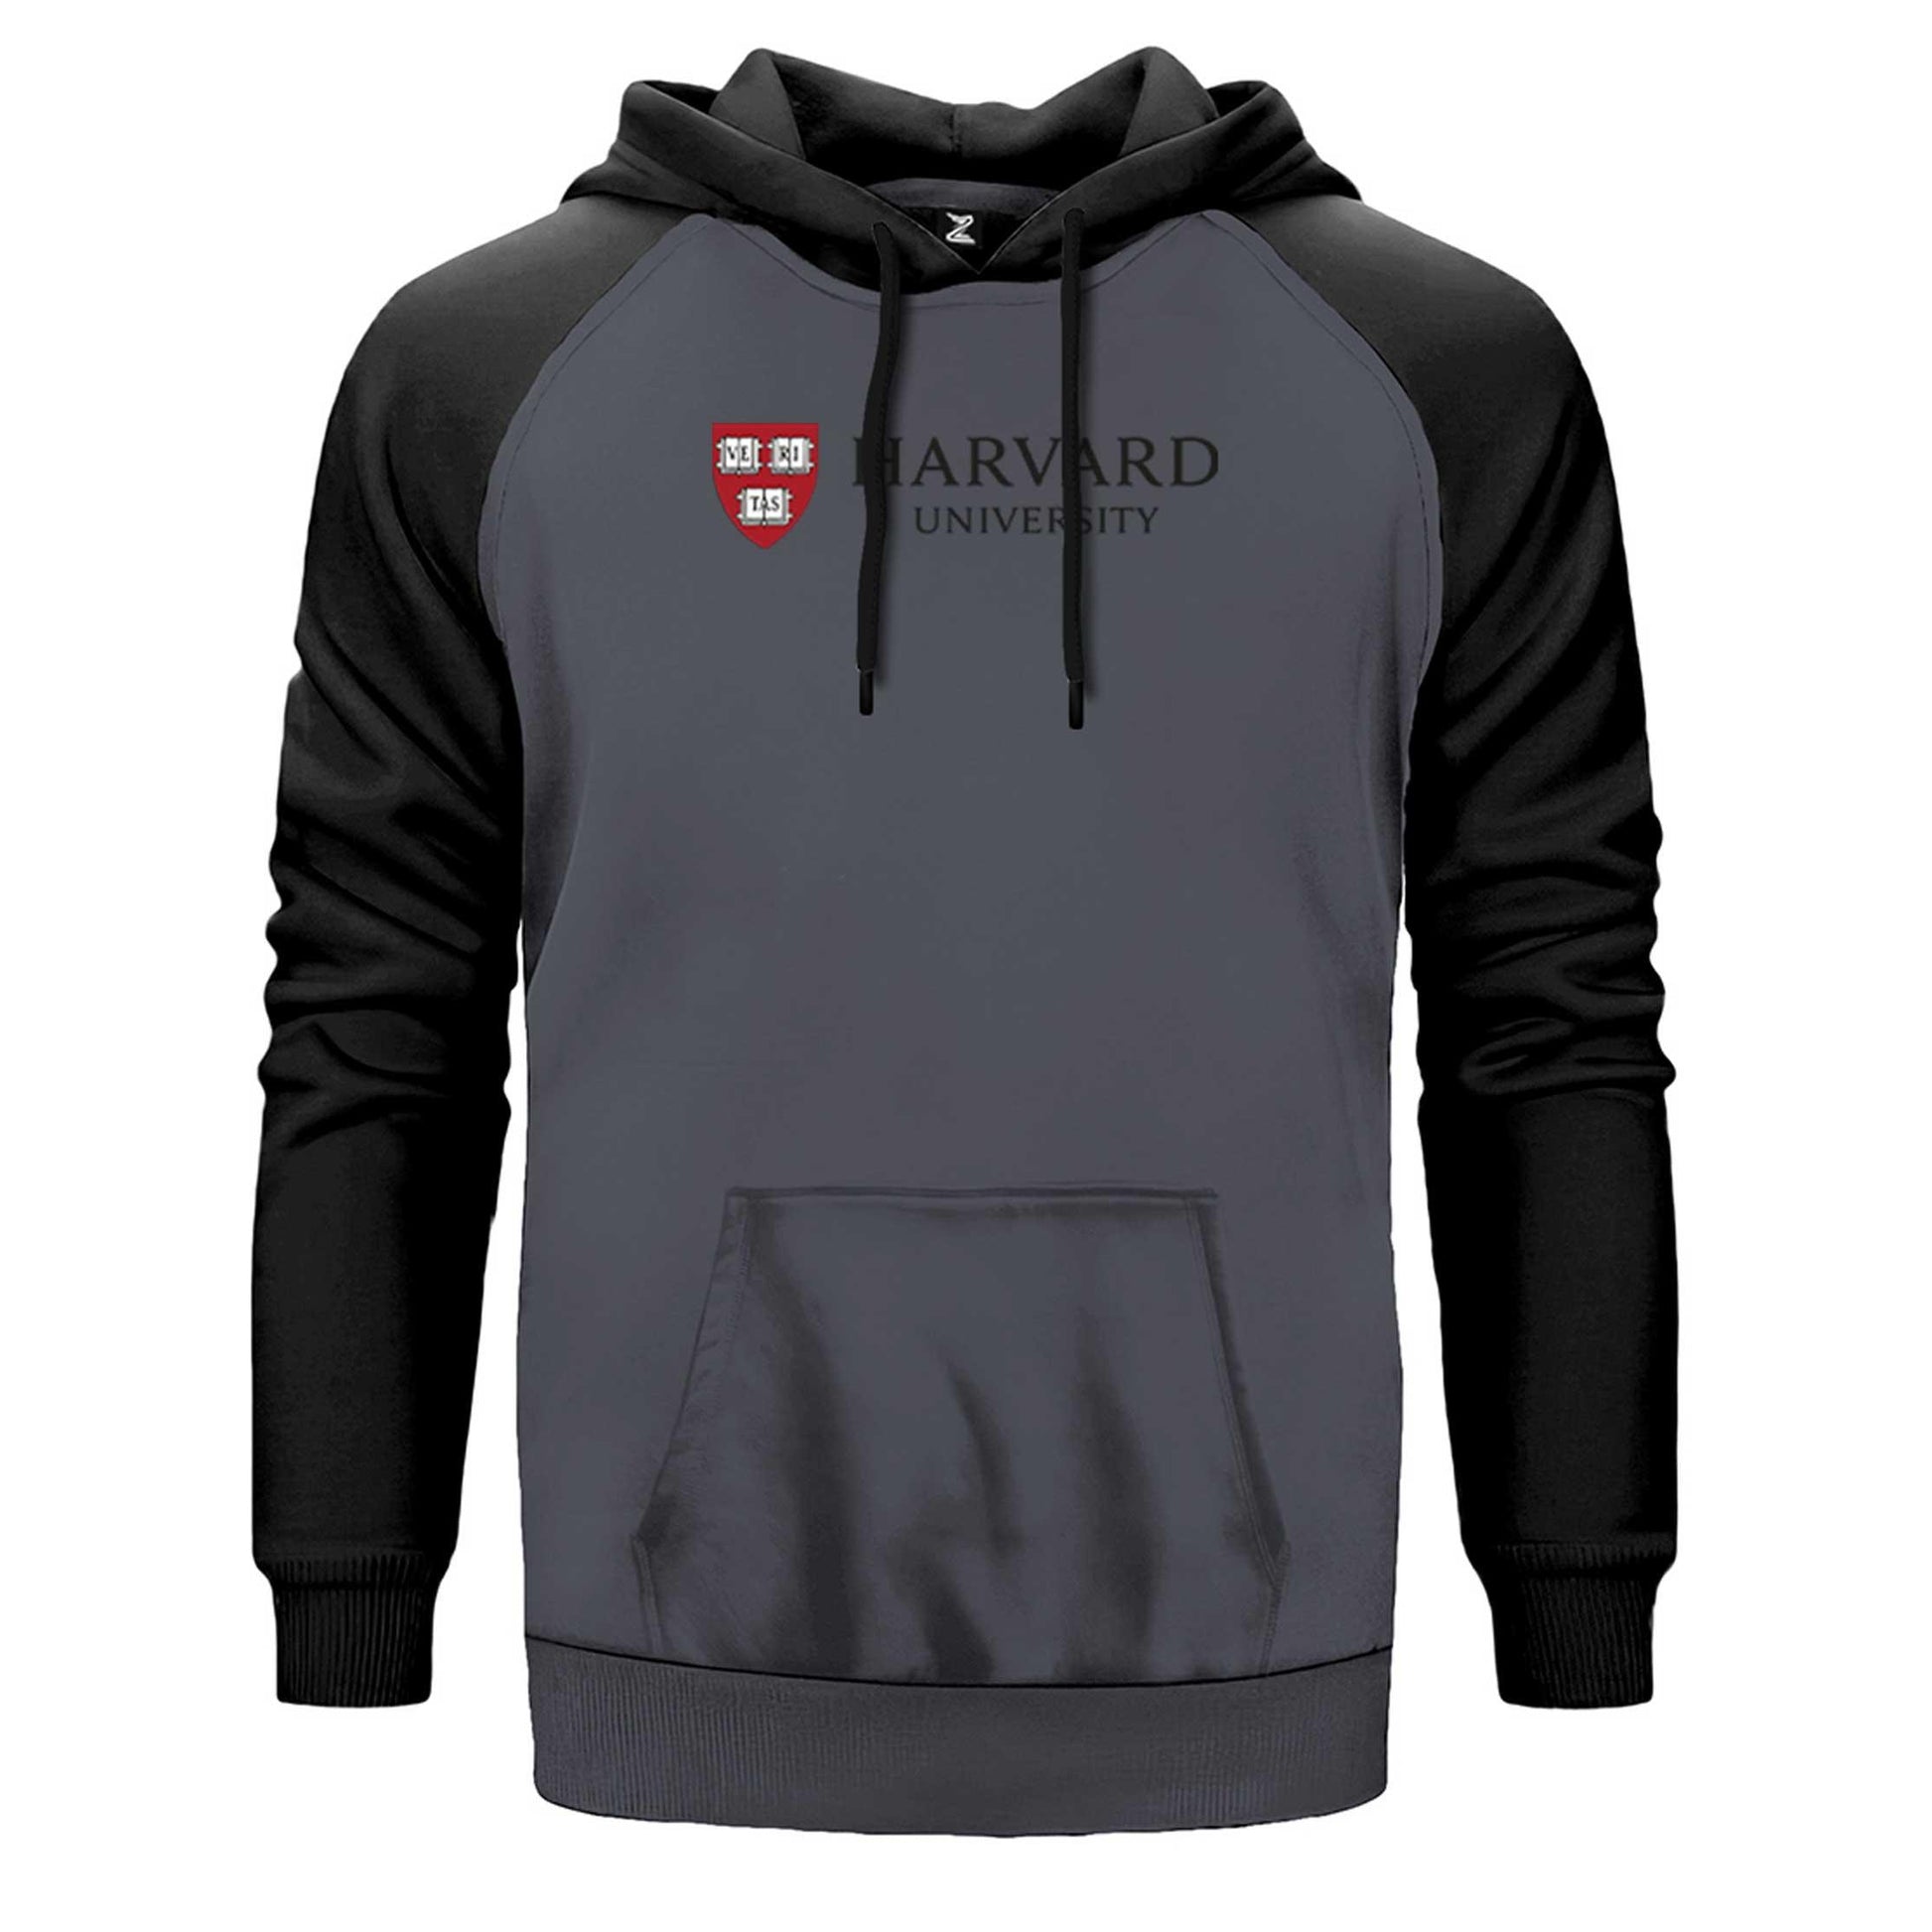 Harvard University Logo Text Çift Renk Reglan Kol Sweatshirt - Zepplingiyim